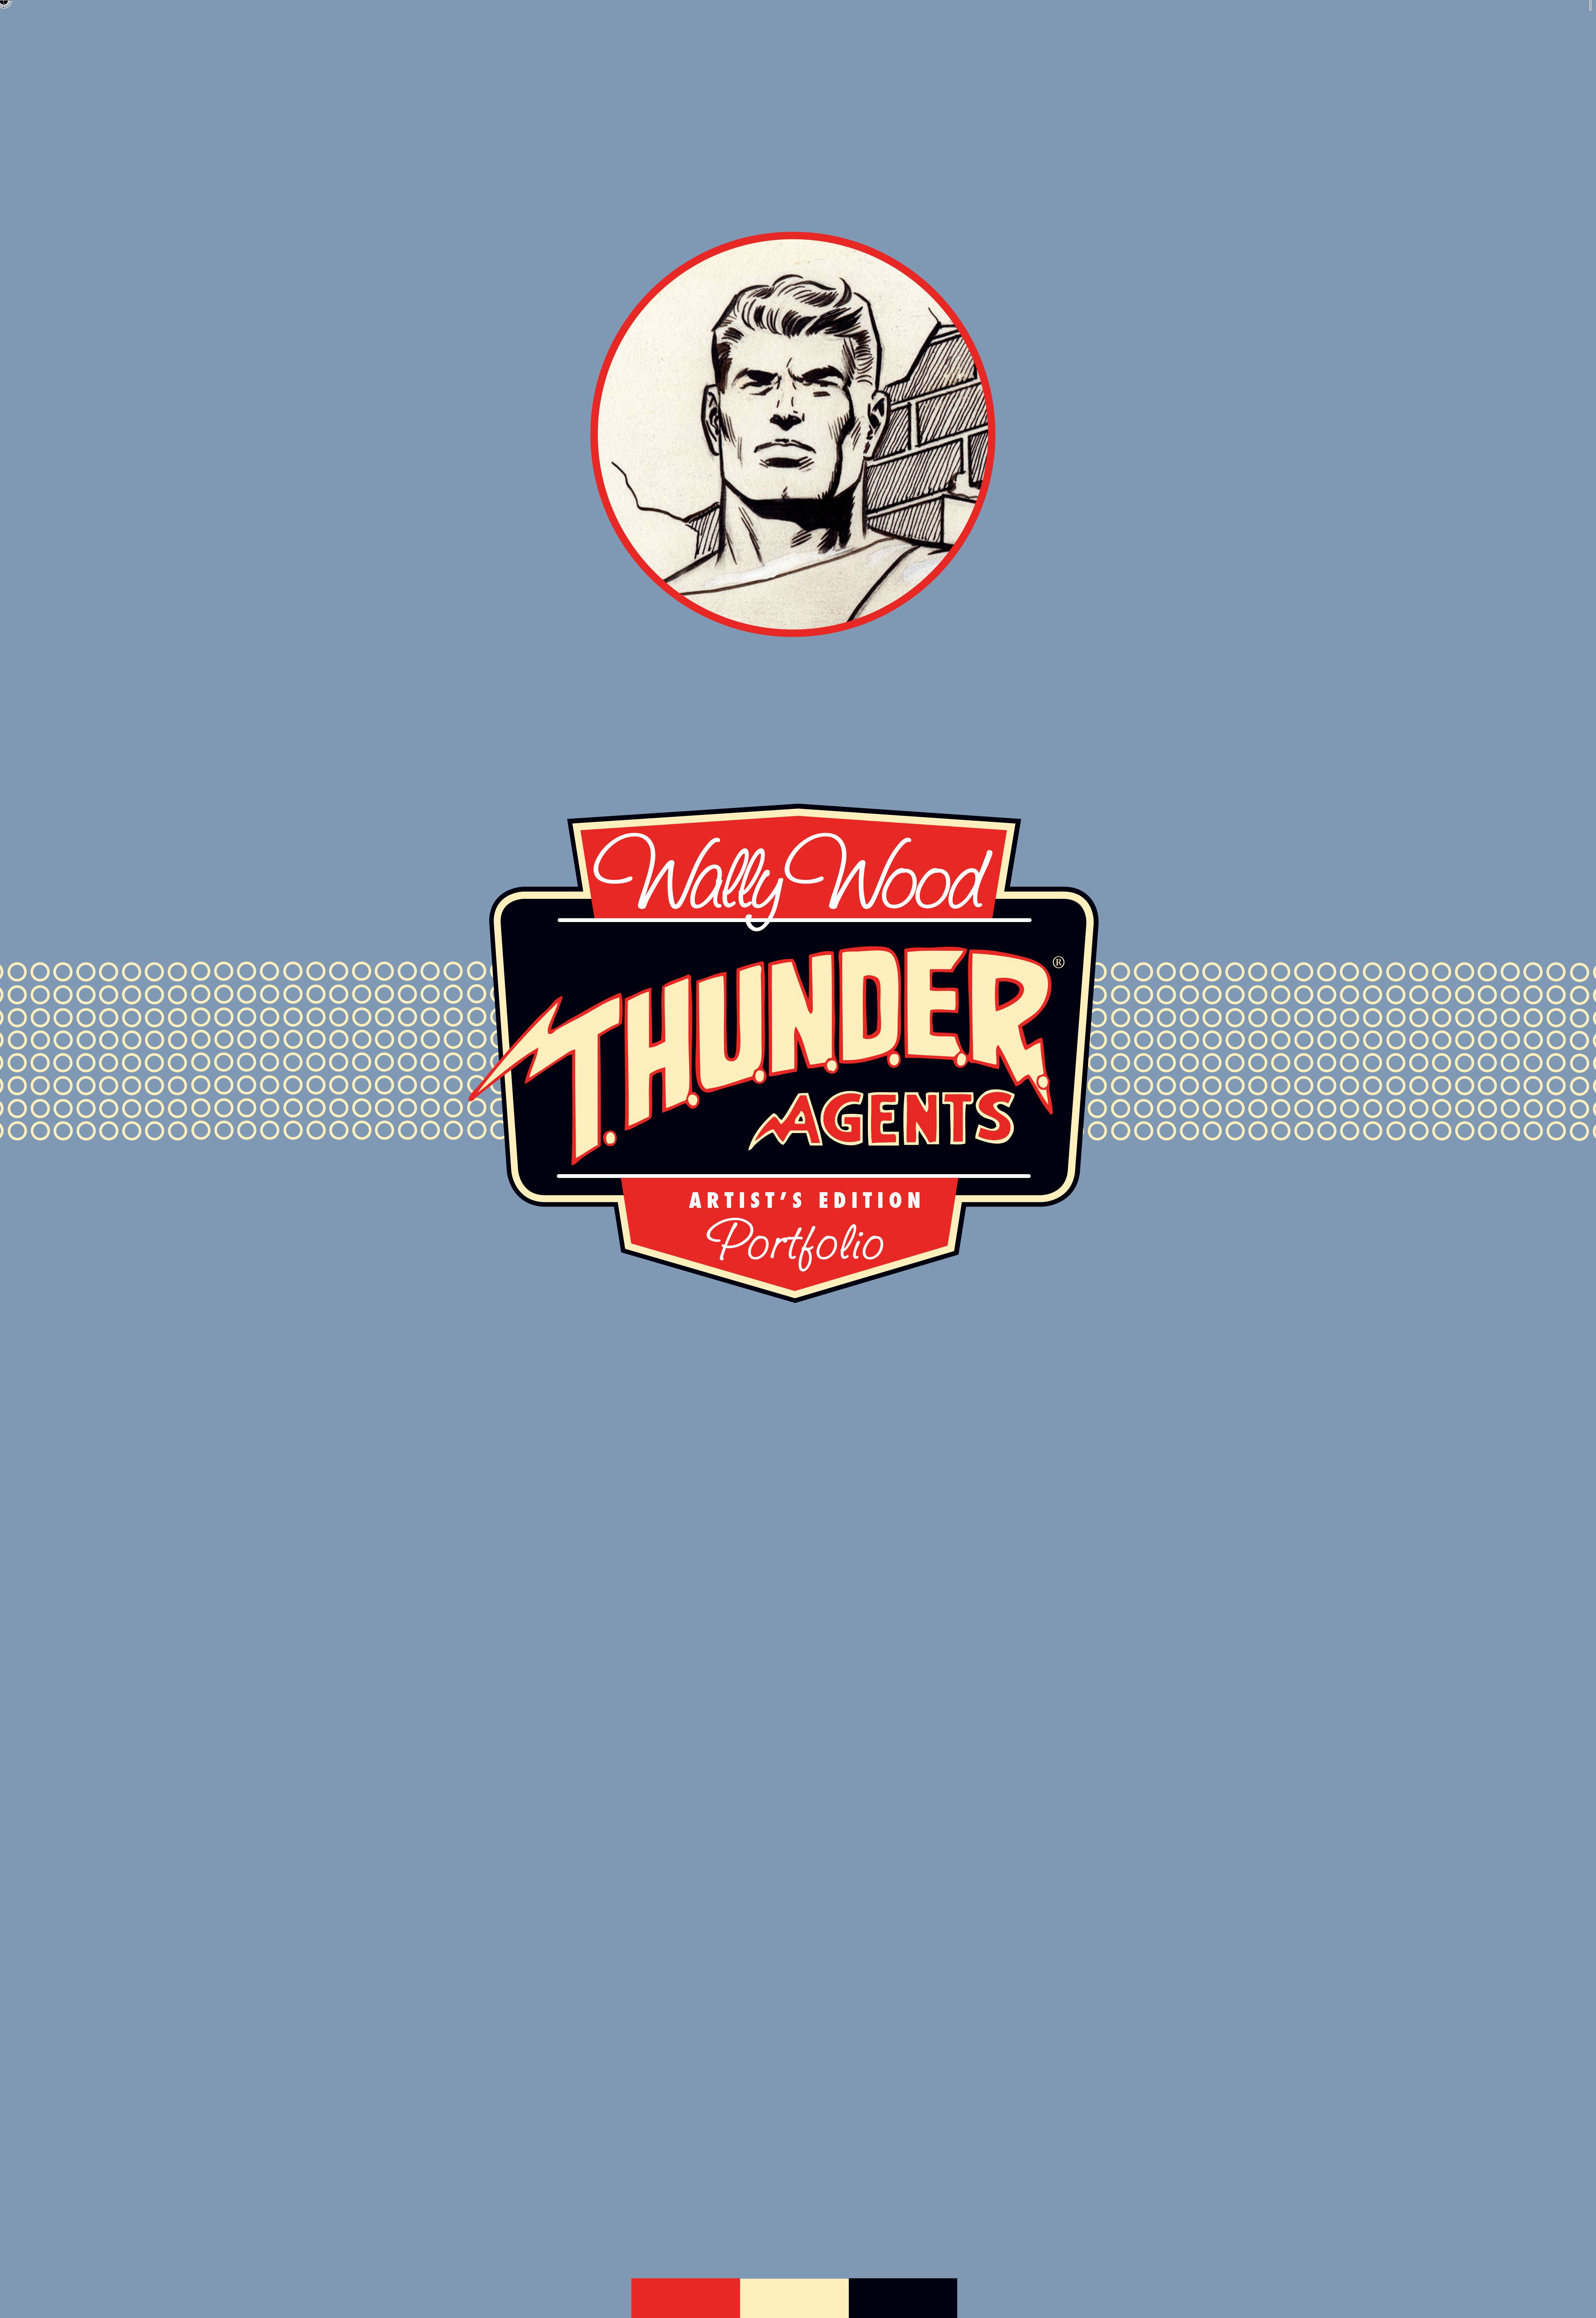 Wally Wood Thunder Agents Artist Edition Portfolio Edition